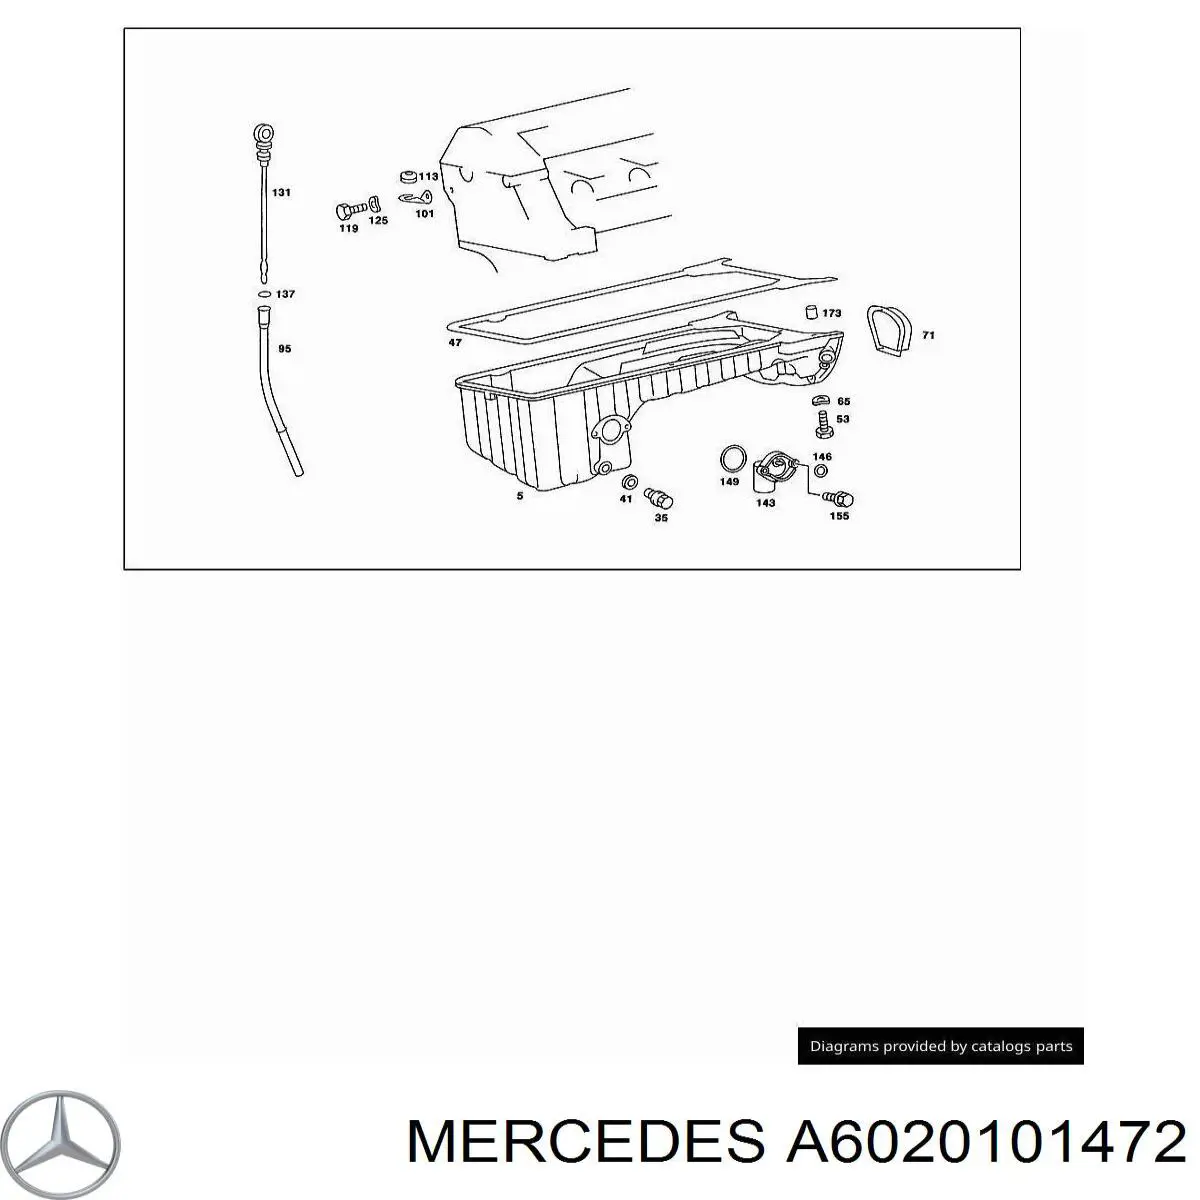 A6020101472 Mercedes sonda (indicador do nível de óleo no motor)